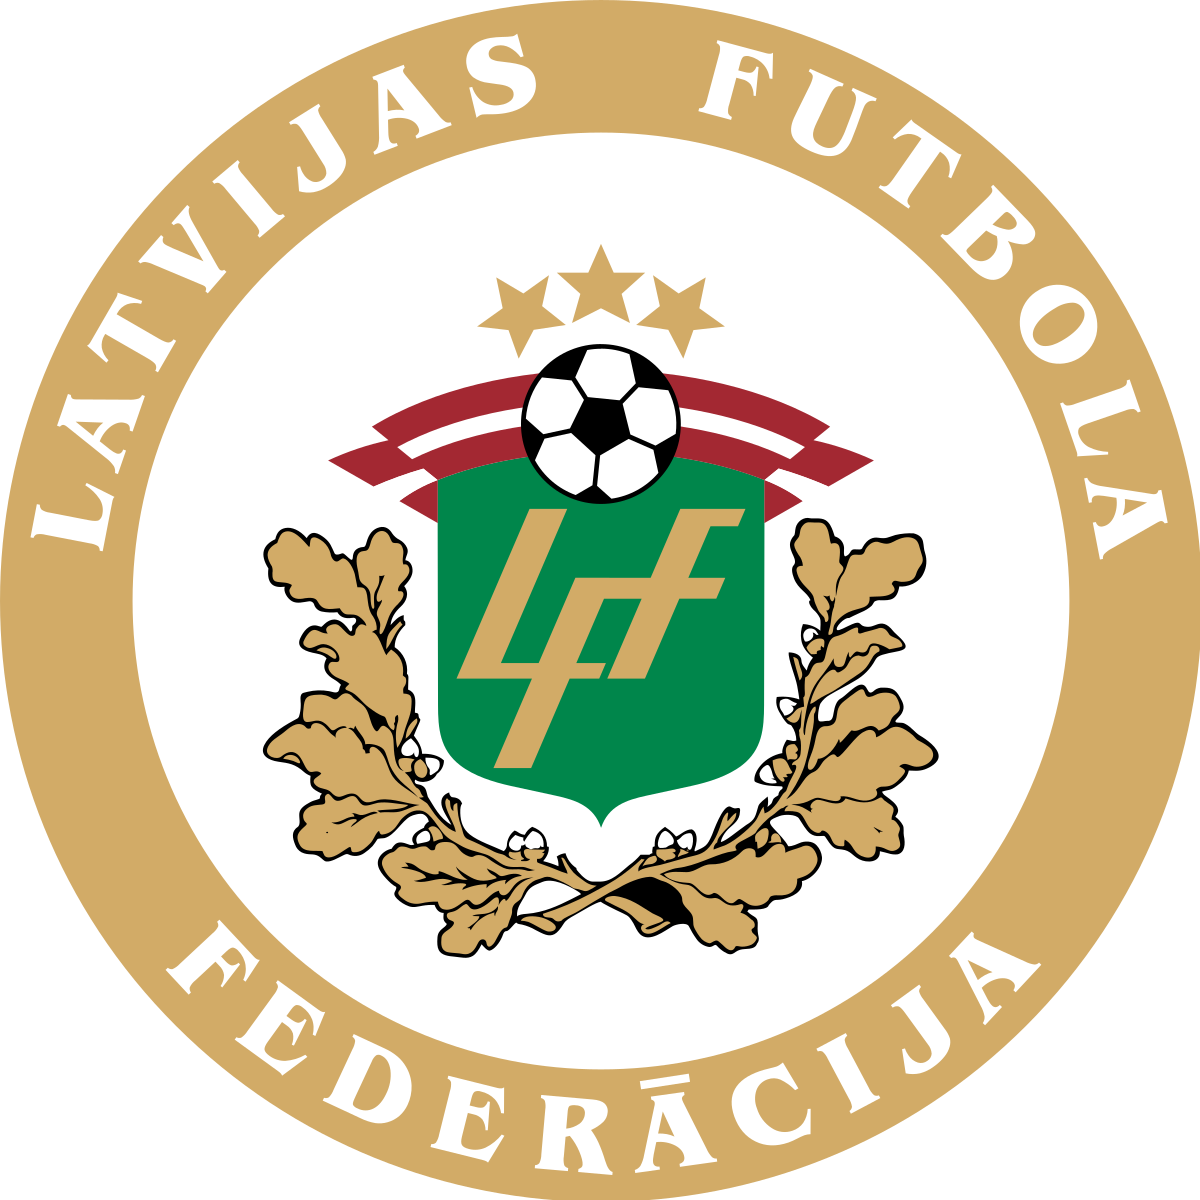 Latvian Football Federation - Wikipedia